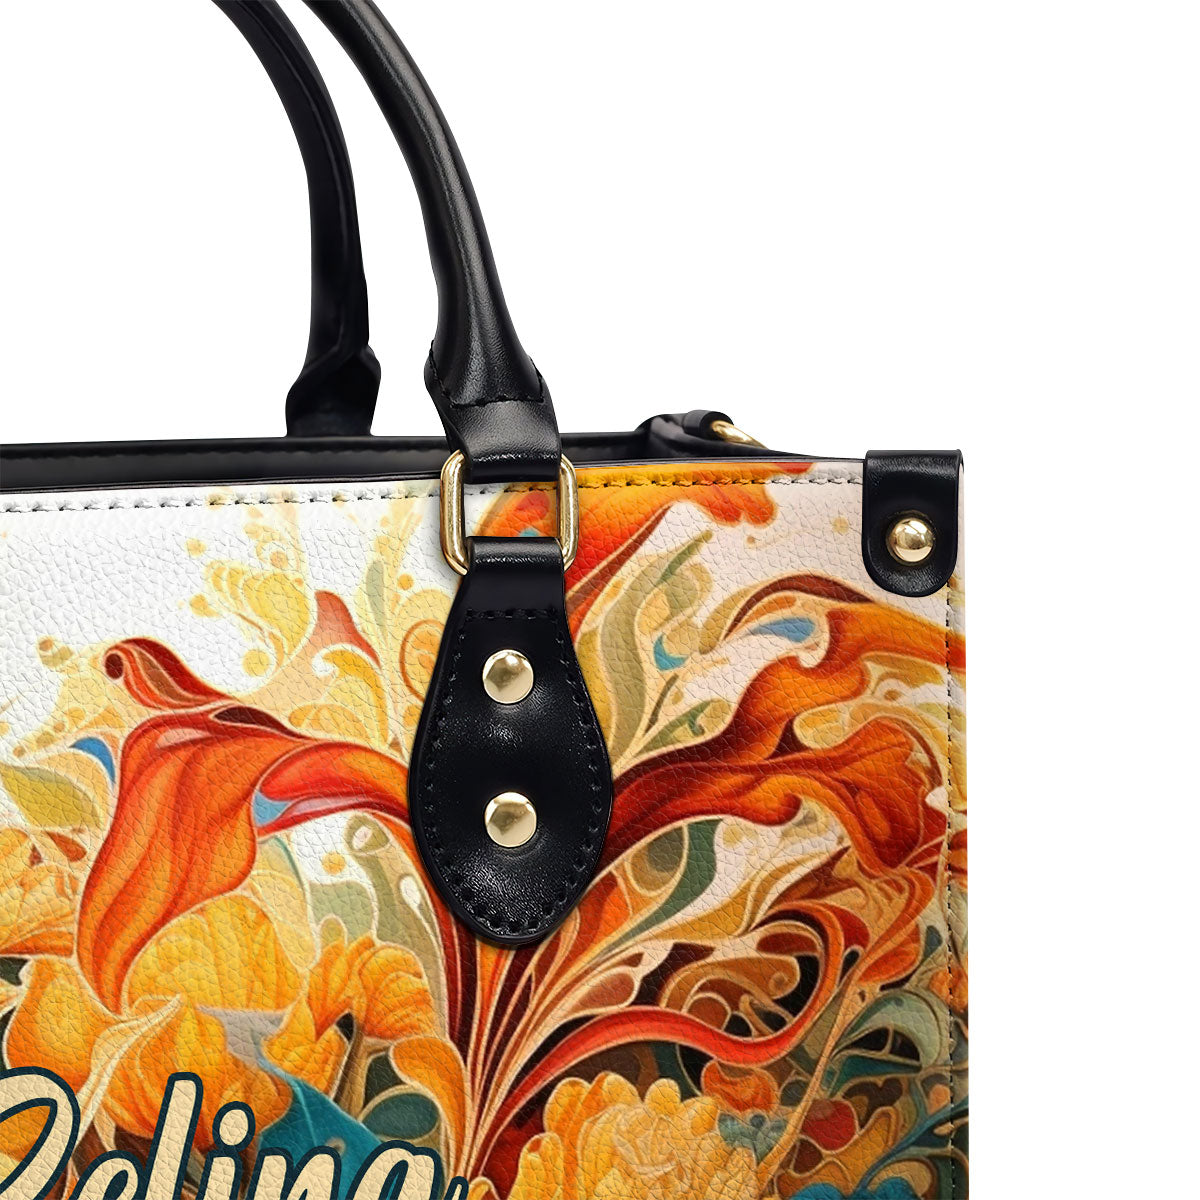 Beautiful Flower - Personalized Leather Handbag MS-H2